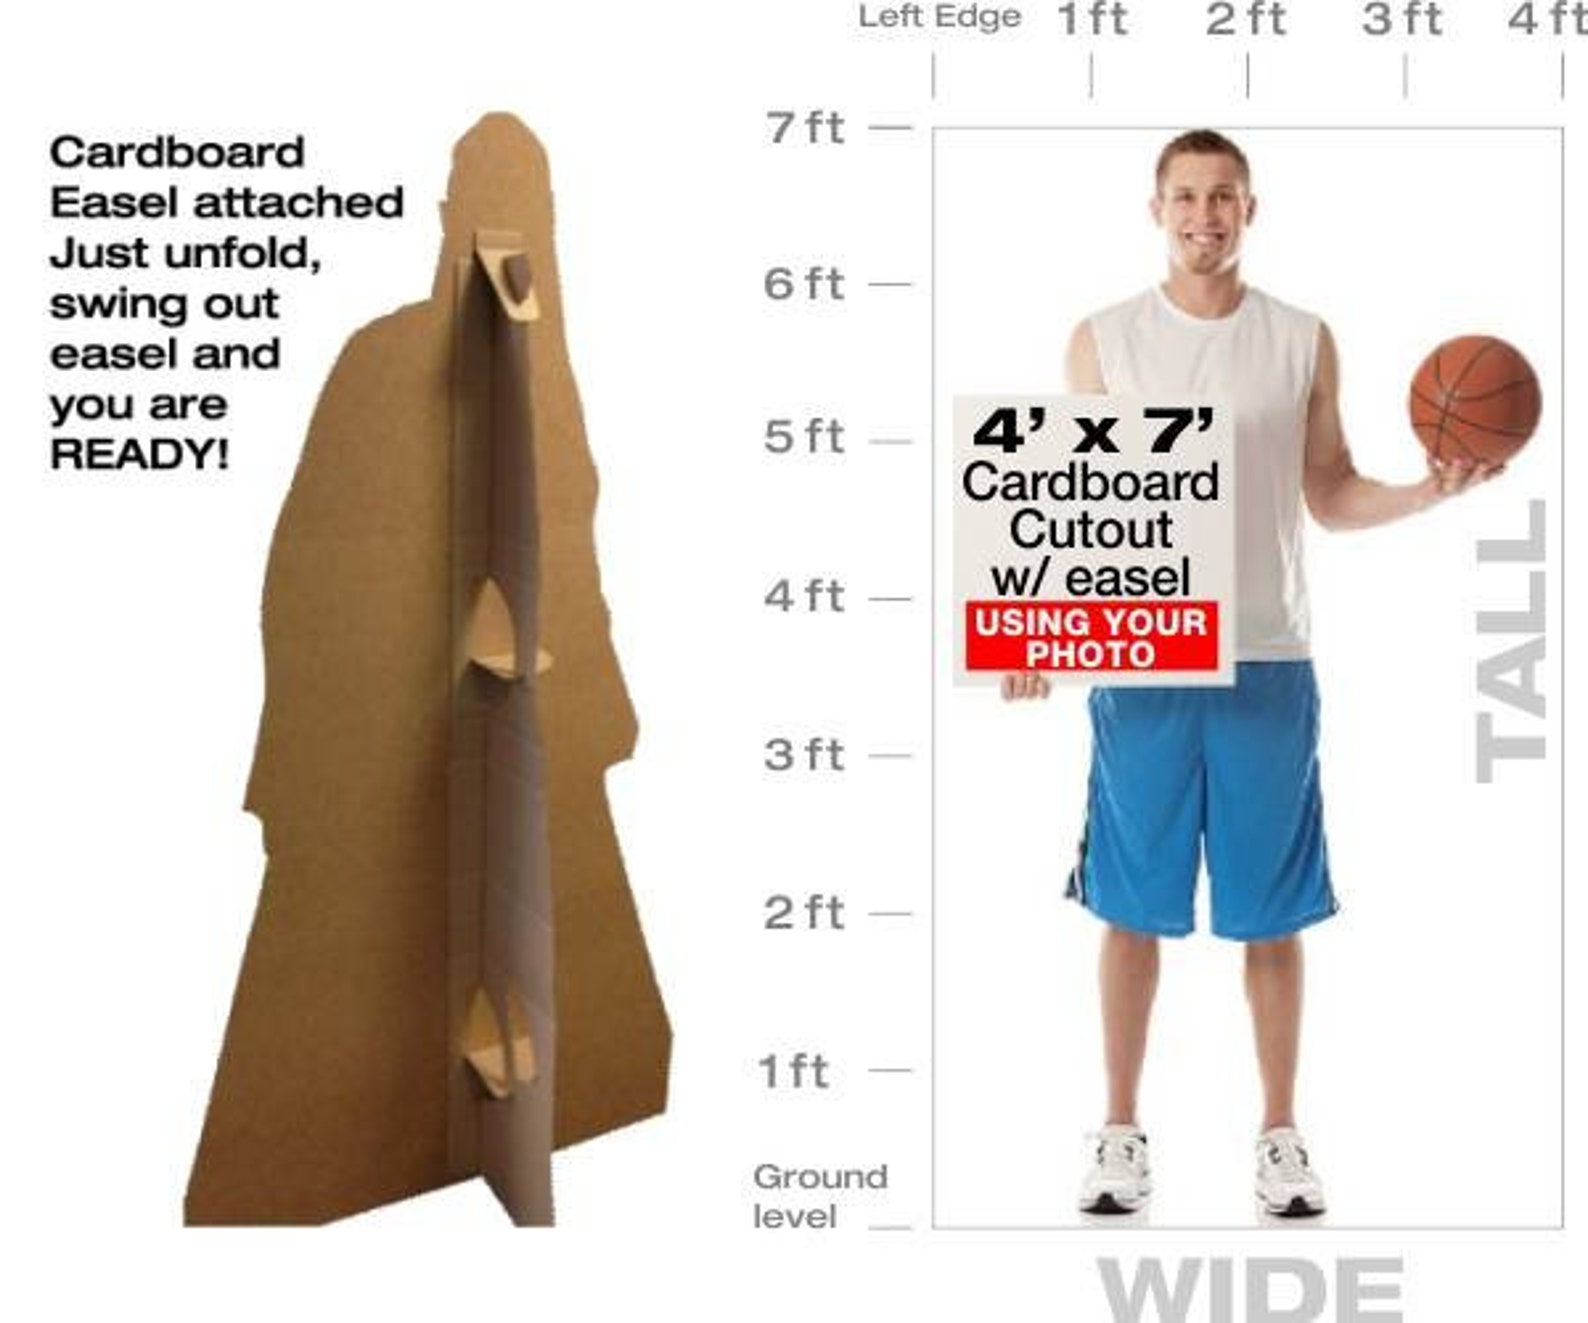 Custom Life Size Cardboard Cutout Standup Standee Etsy